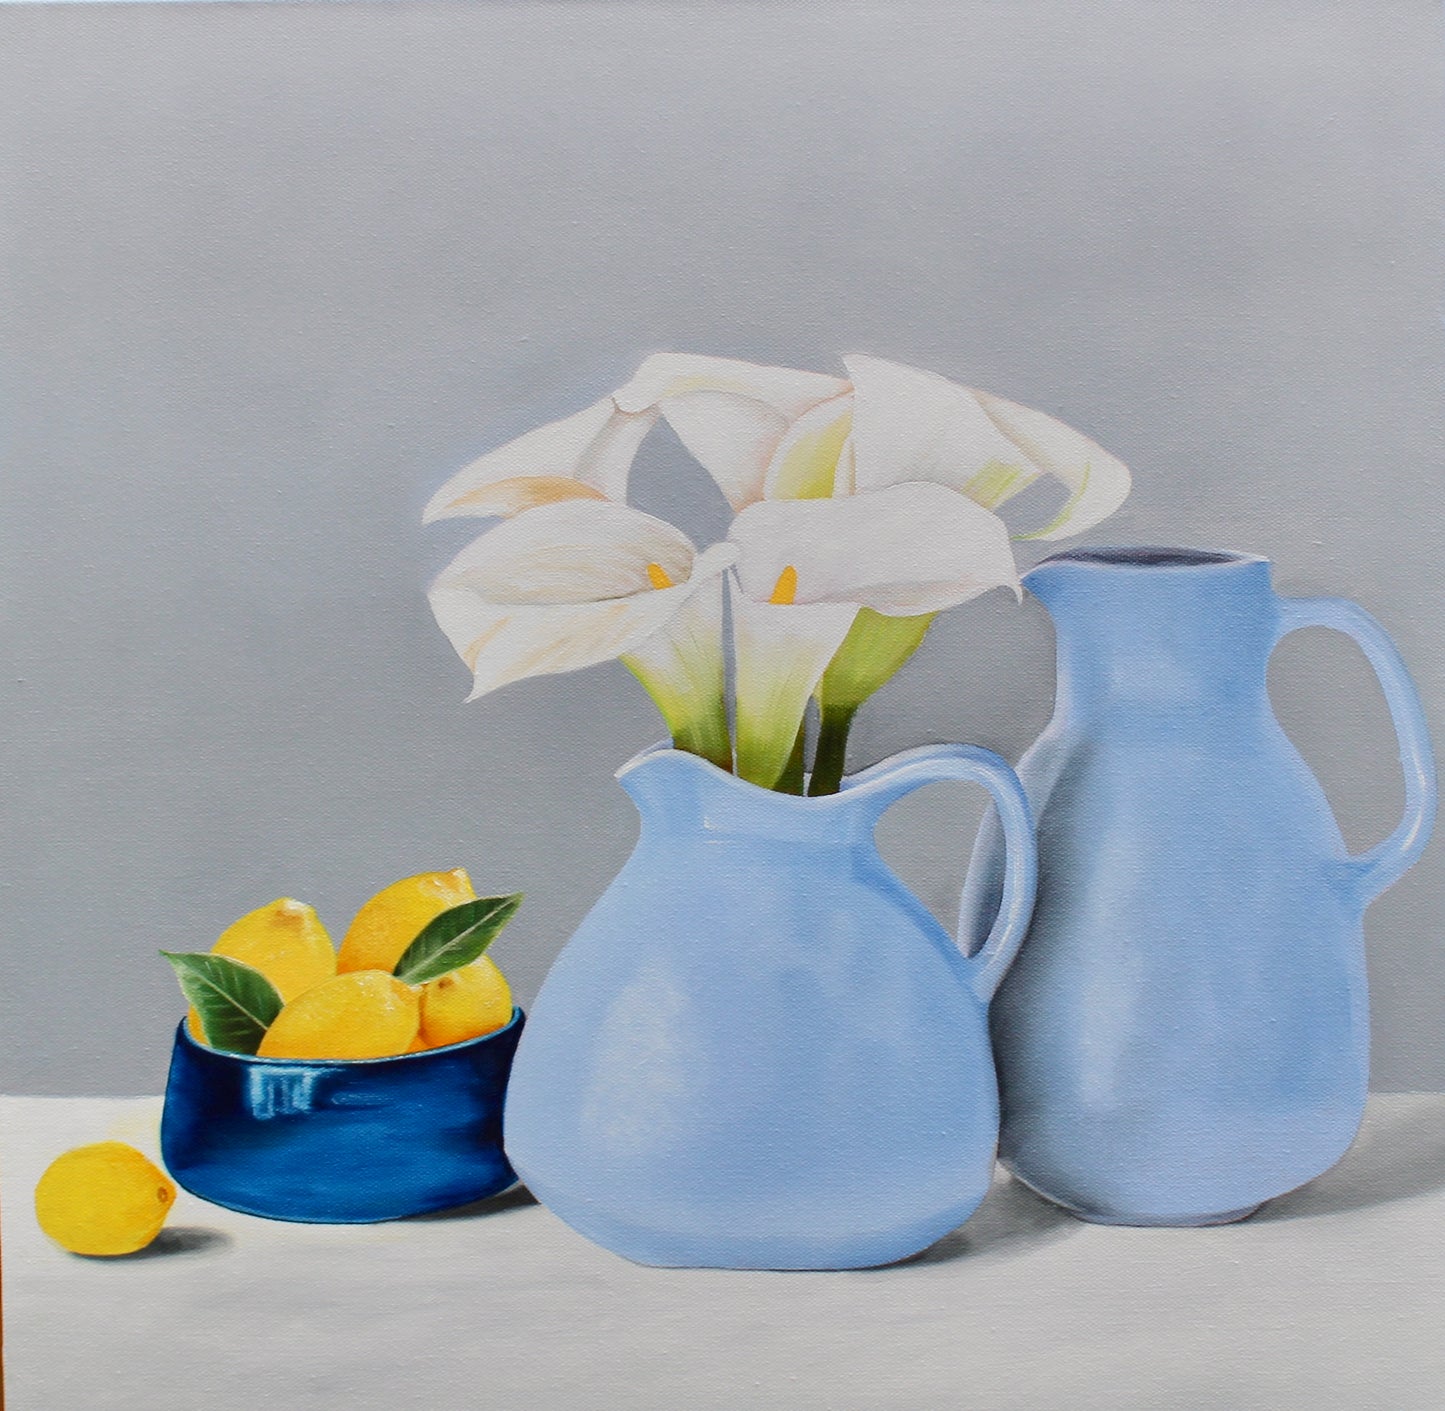 Lily decor on ceramic mug - Original Oil Painting by Shobika